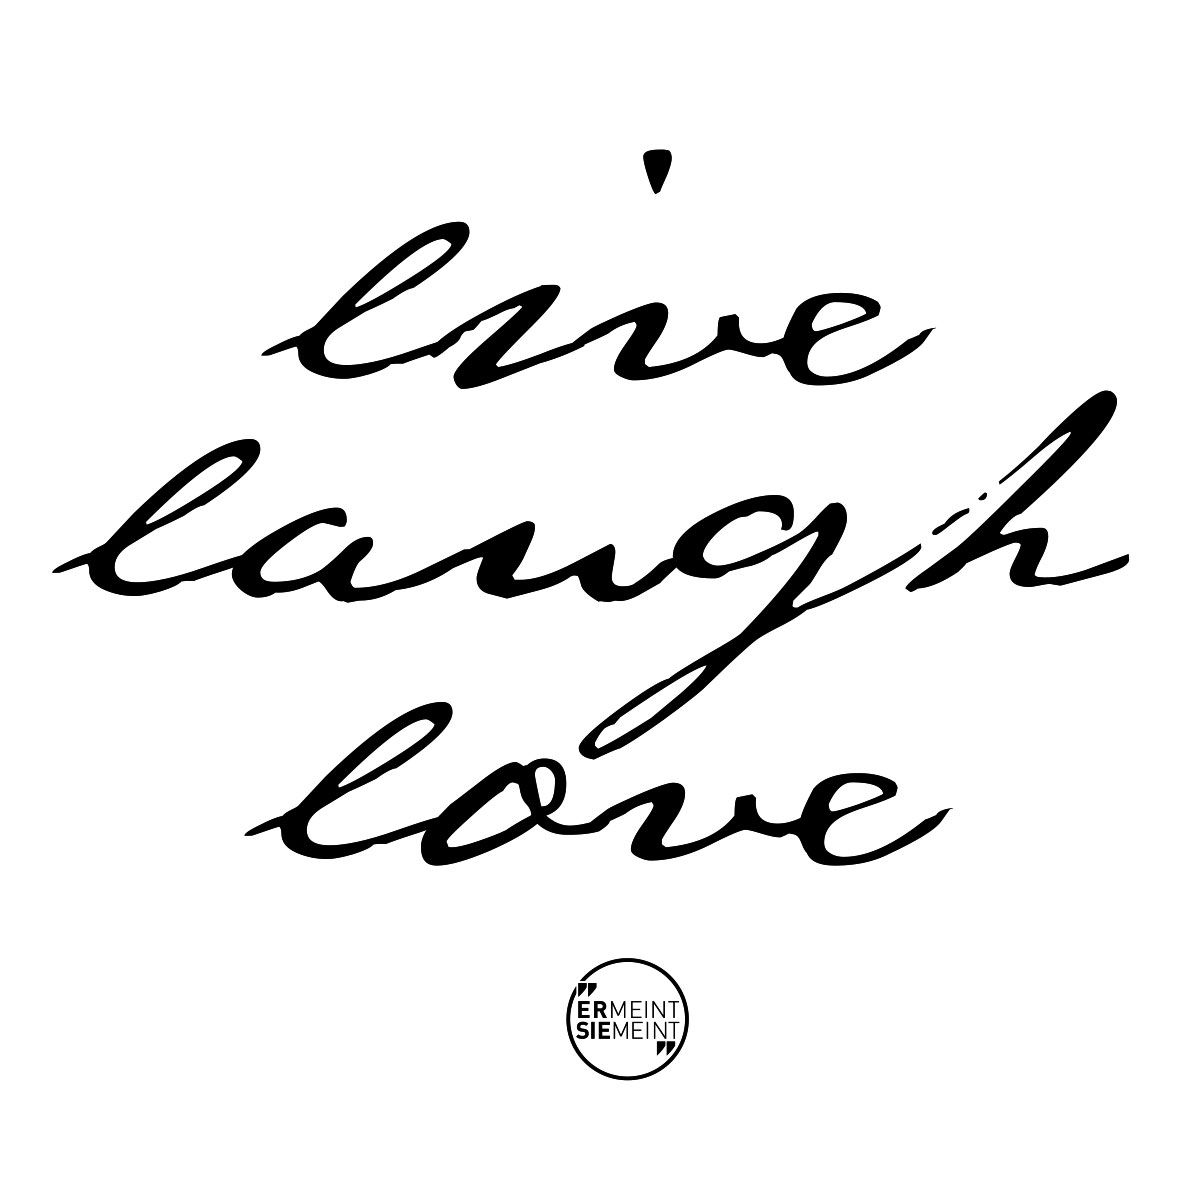 live love laugh